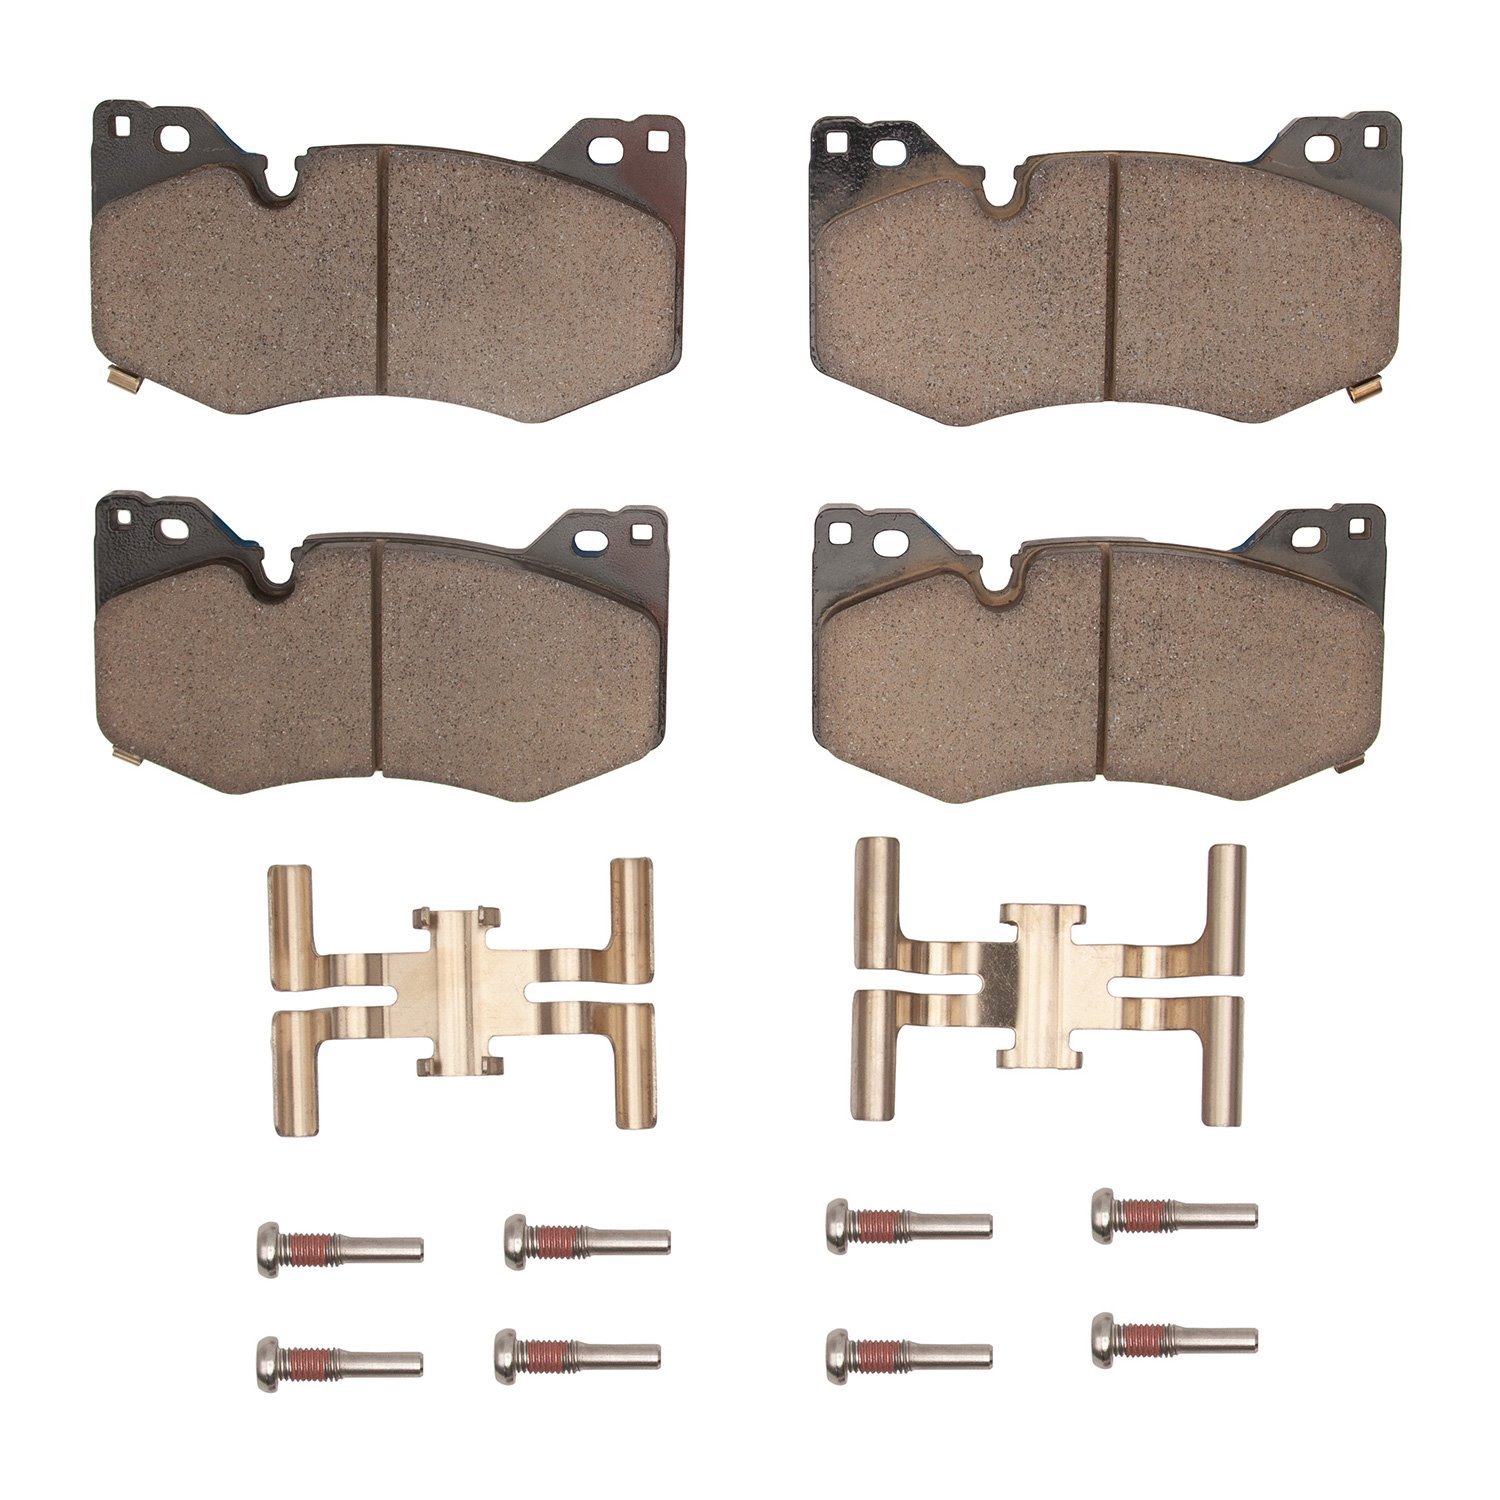 1551-2312-01 5000 Advanced Ceramic Brake Pads & Hardware Kit, Fits Select GM, Position: Front